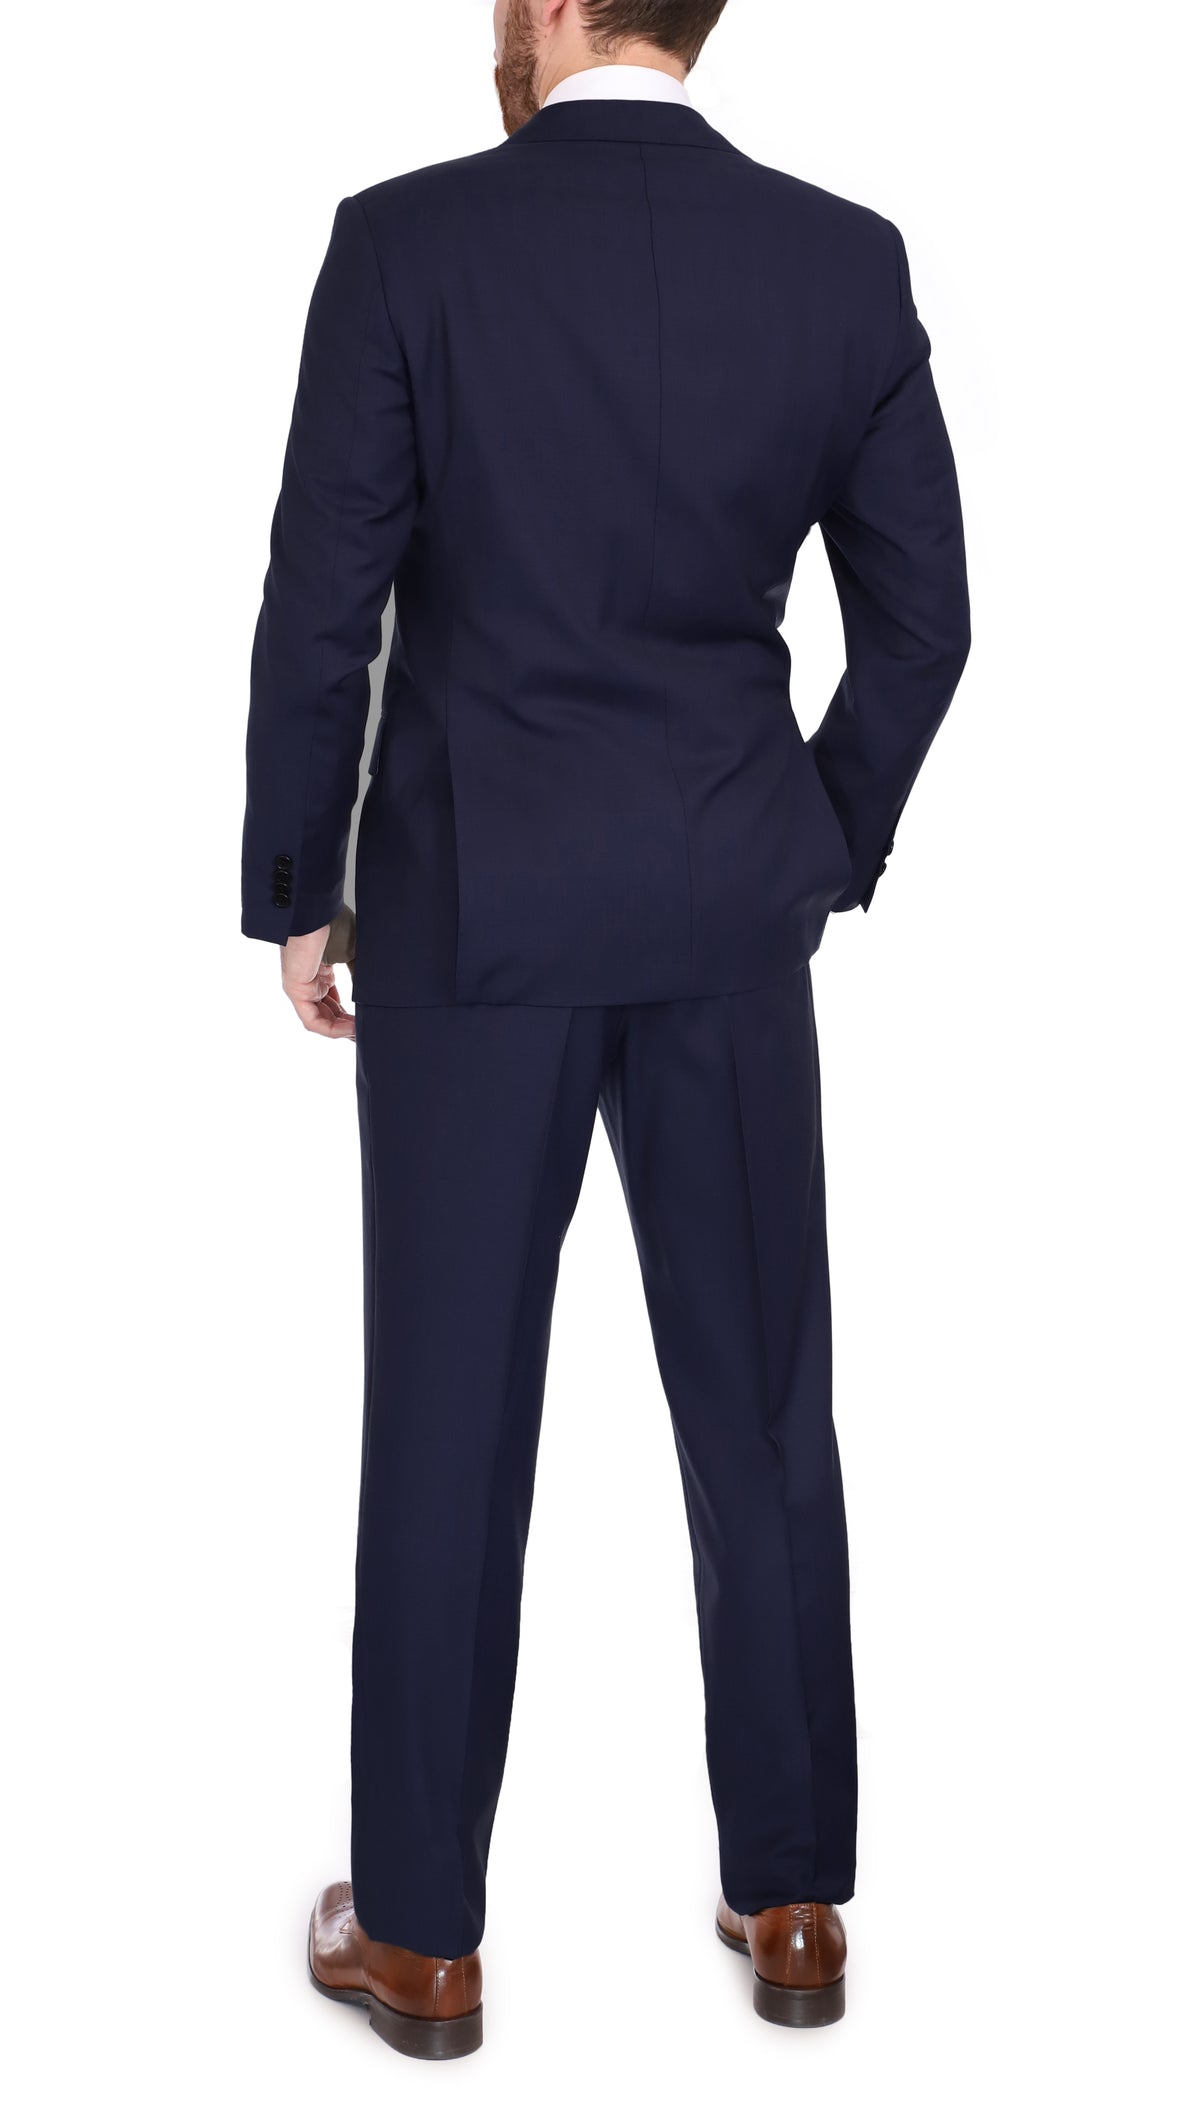 Blujacket Mens Solid Navy Blue Wool Cashmere Trim Fit 2 Piece Suit